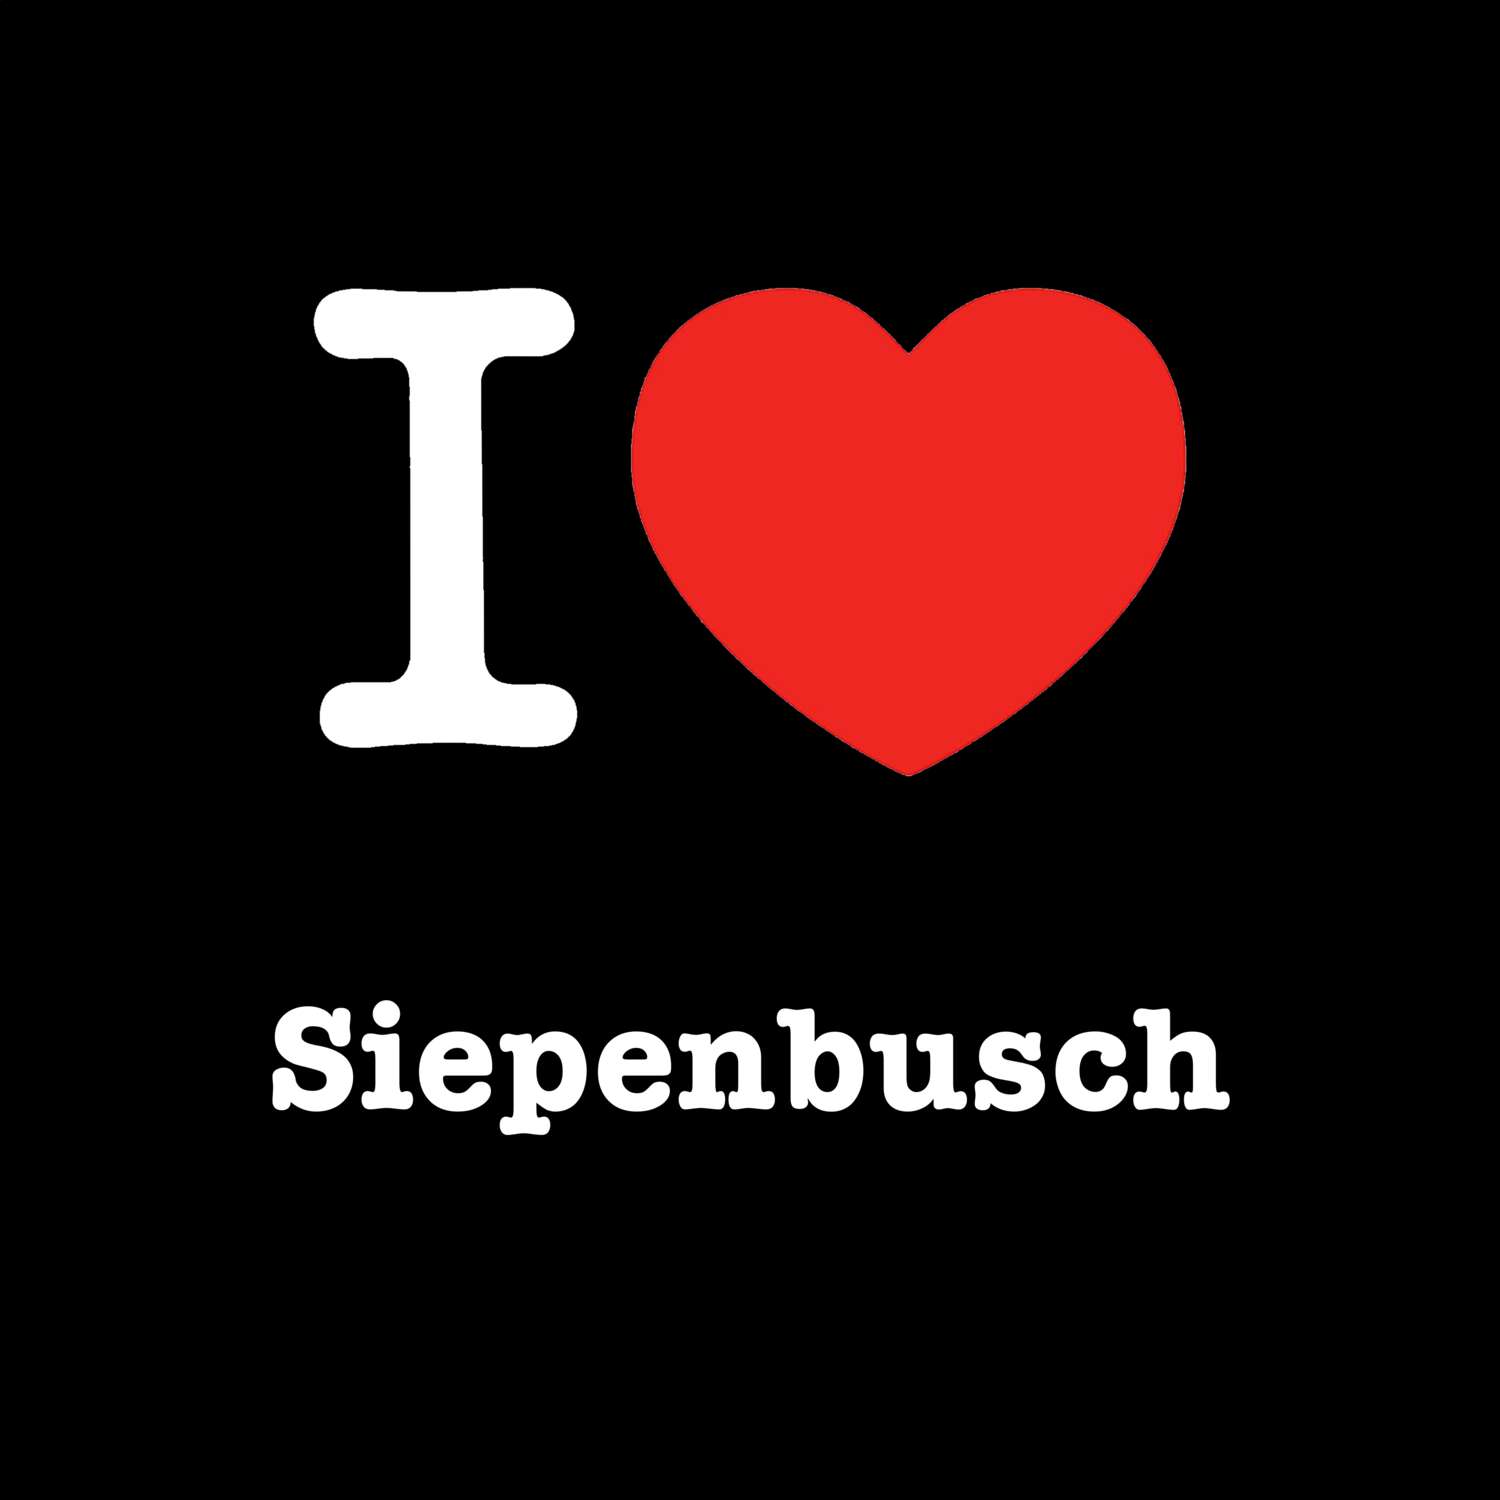 Siepenbusch T-Shirt »I love«